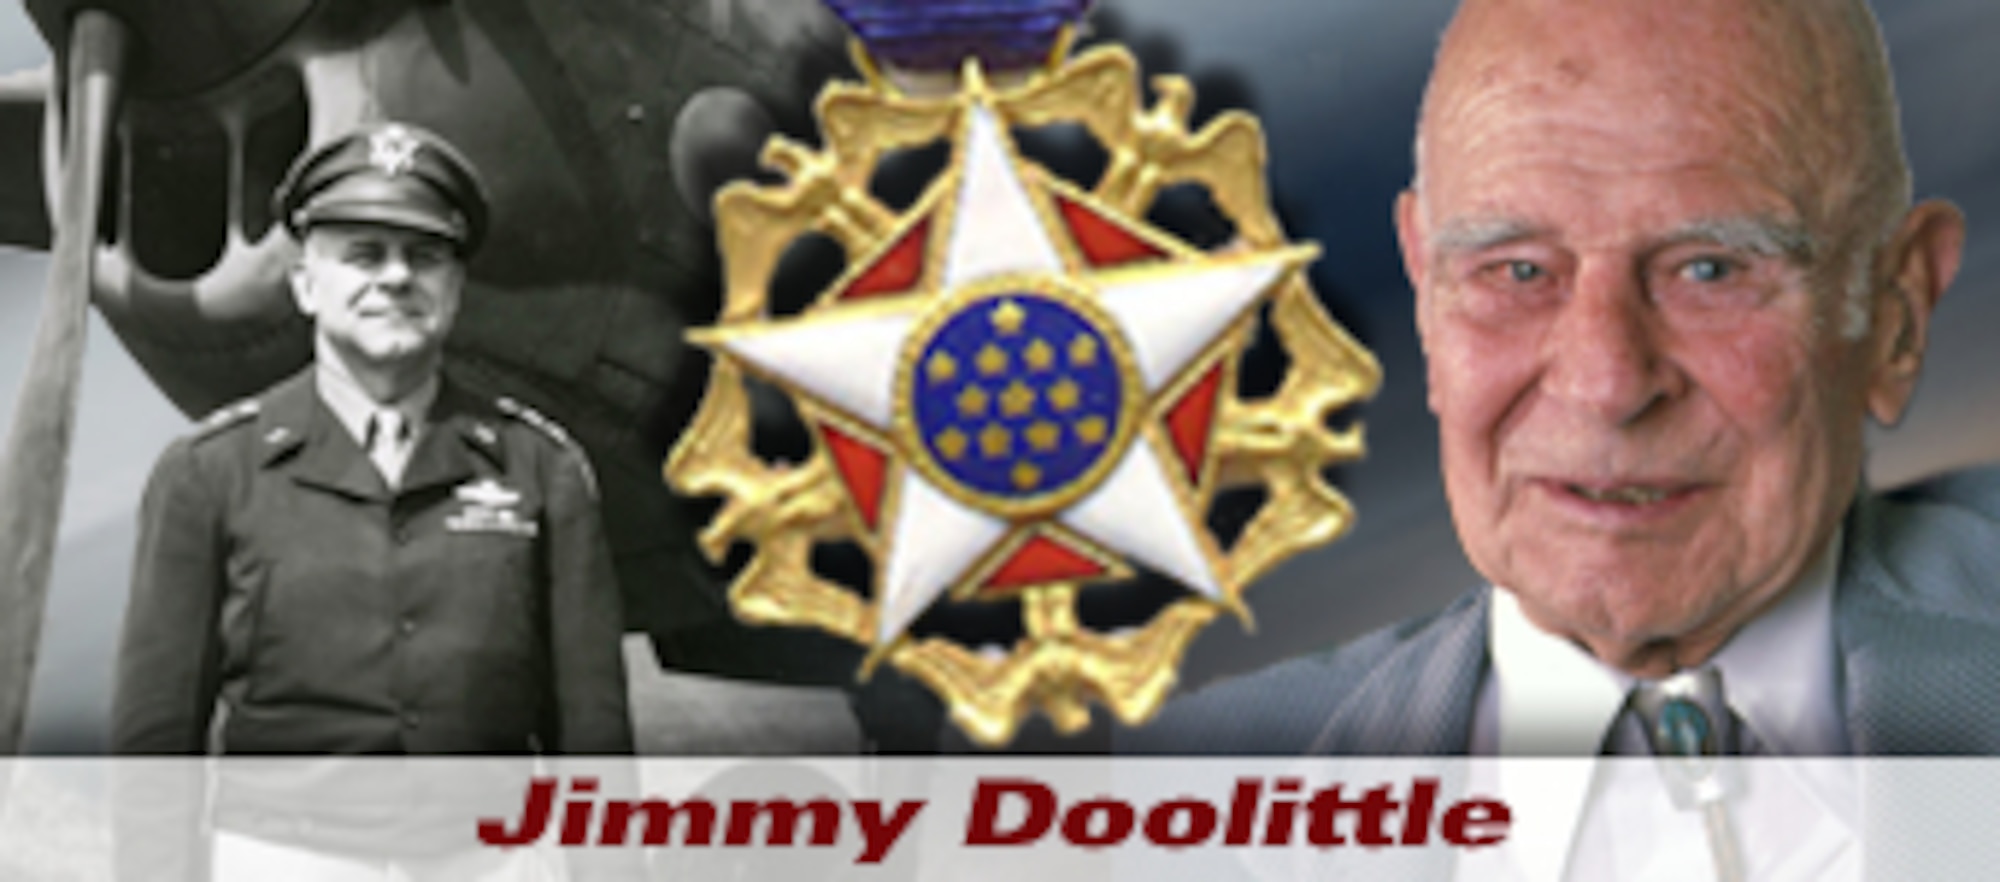 Gen. Jimmy Doolittle history spotlight graphic (U.S. Air Force graphic).